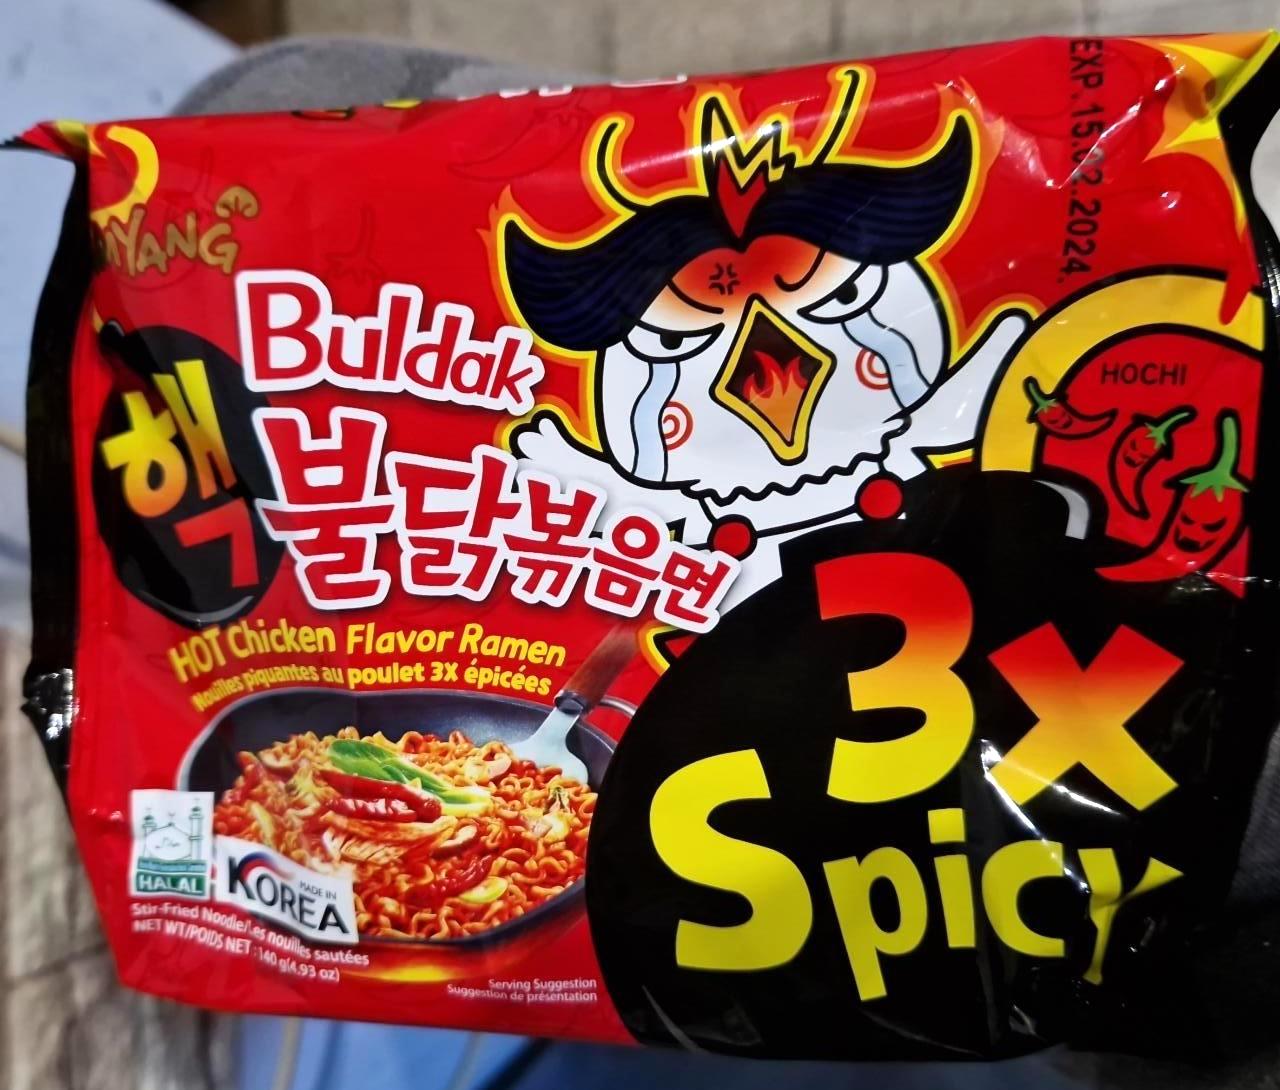 Fotografie - Buldak Hot Chicken Flavor Ramen 3x Spicy Samyang